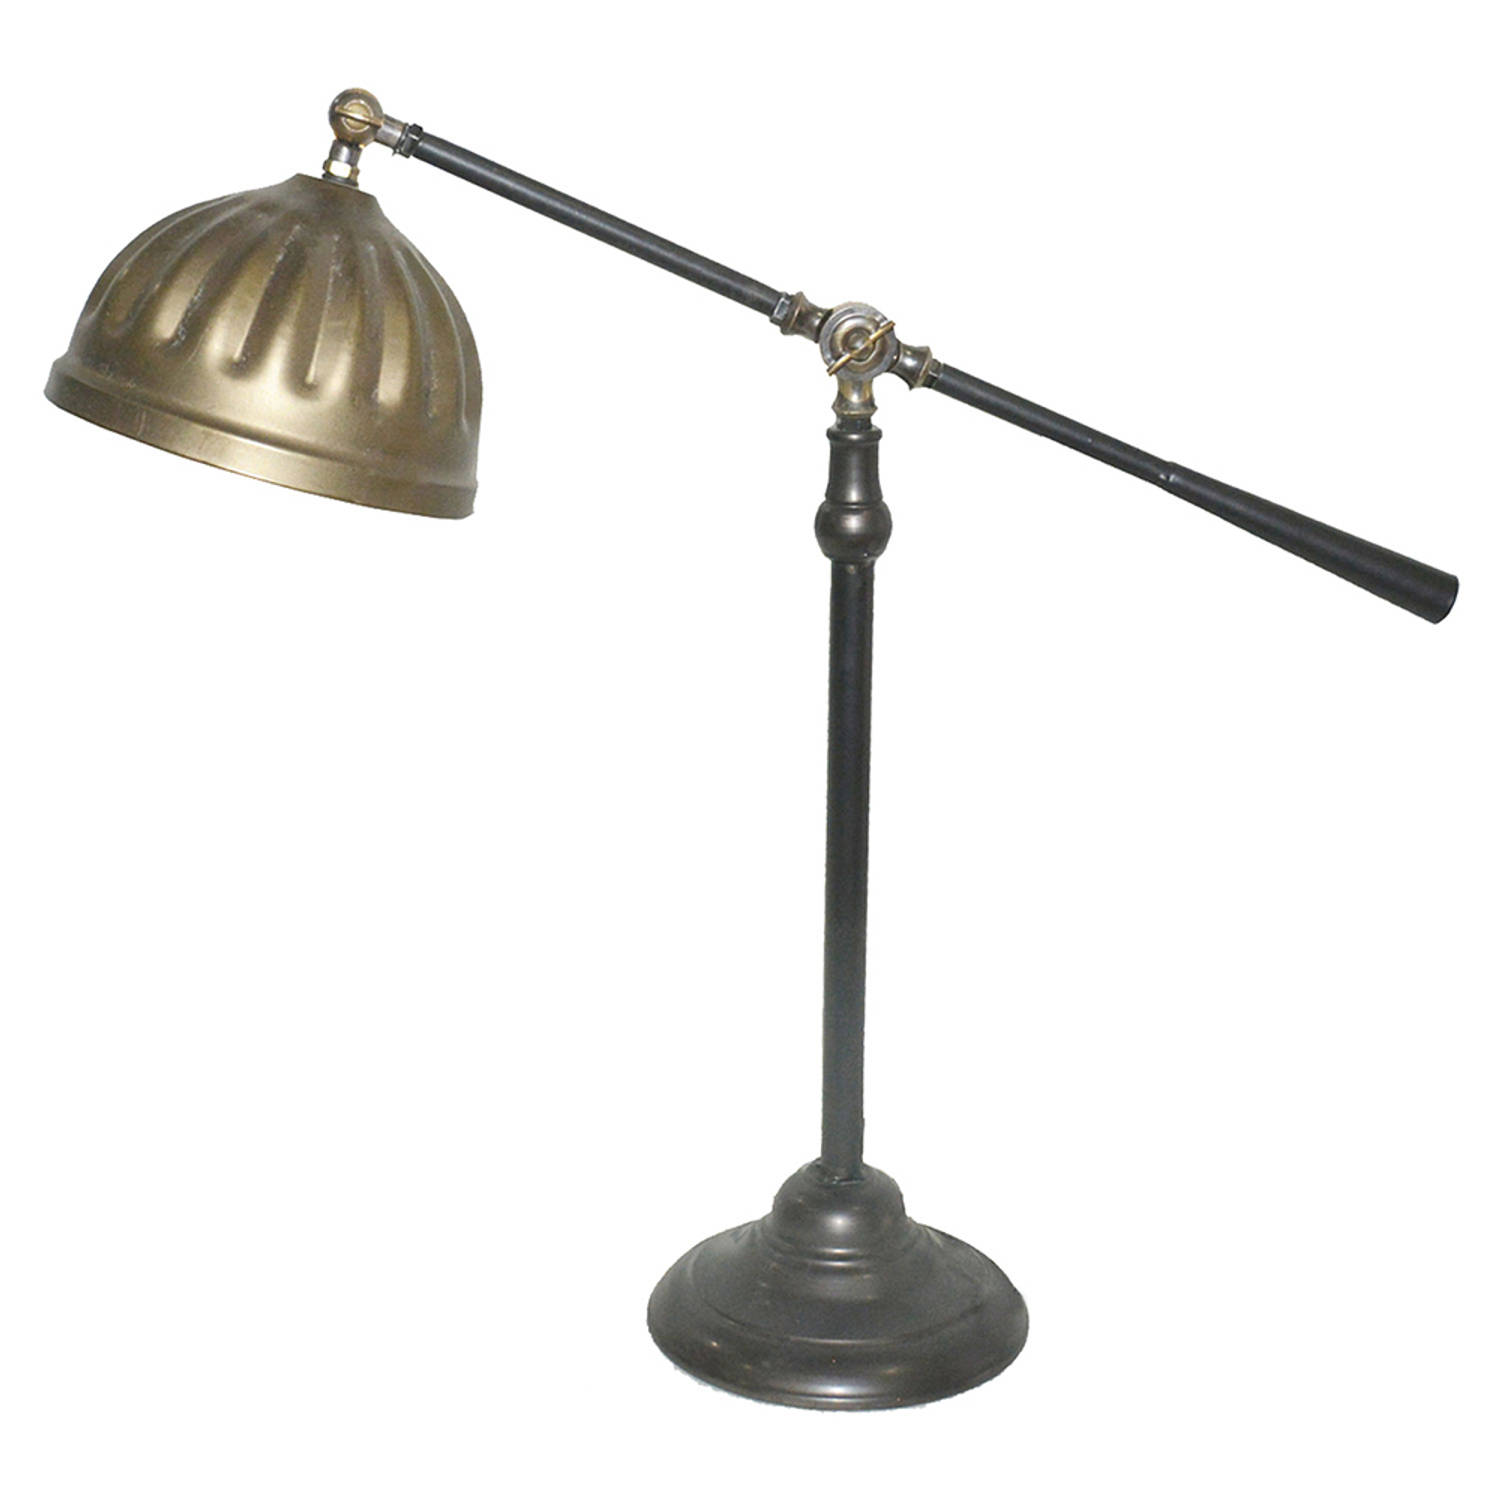 HAES DECO - Bureaulamp - Industrial - Vintage / Retro Lamp, formaat 62x19x62 cm - Bruin Metaal - Tafellamp, Sfeerlamp